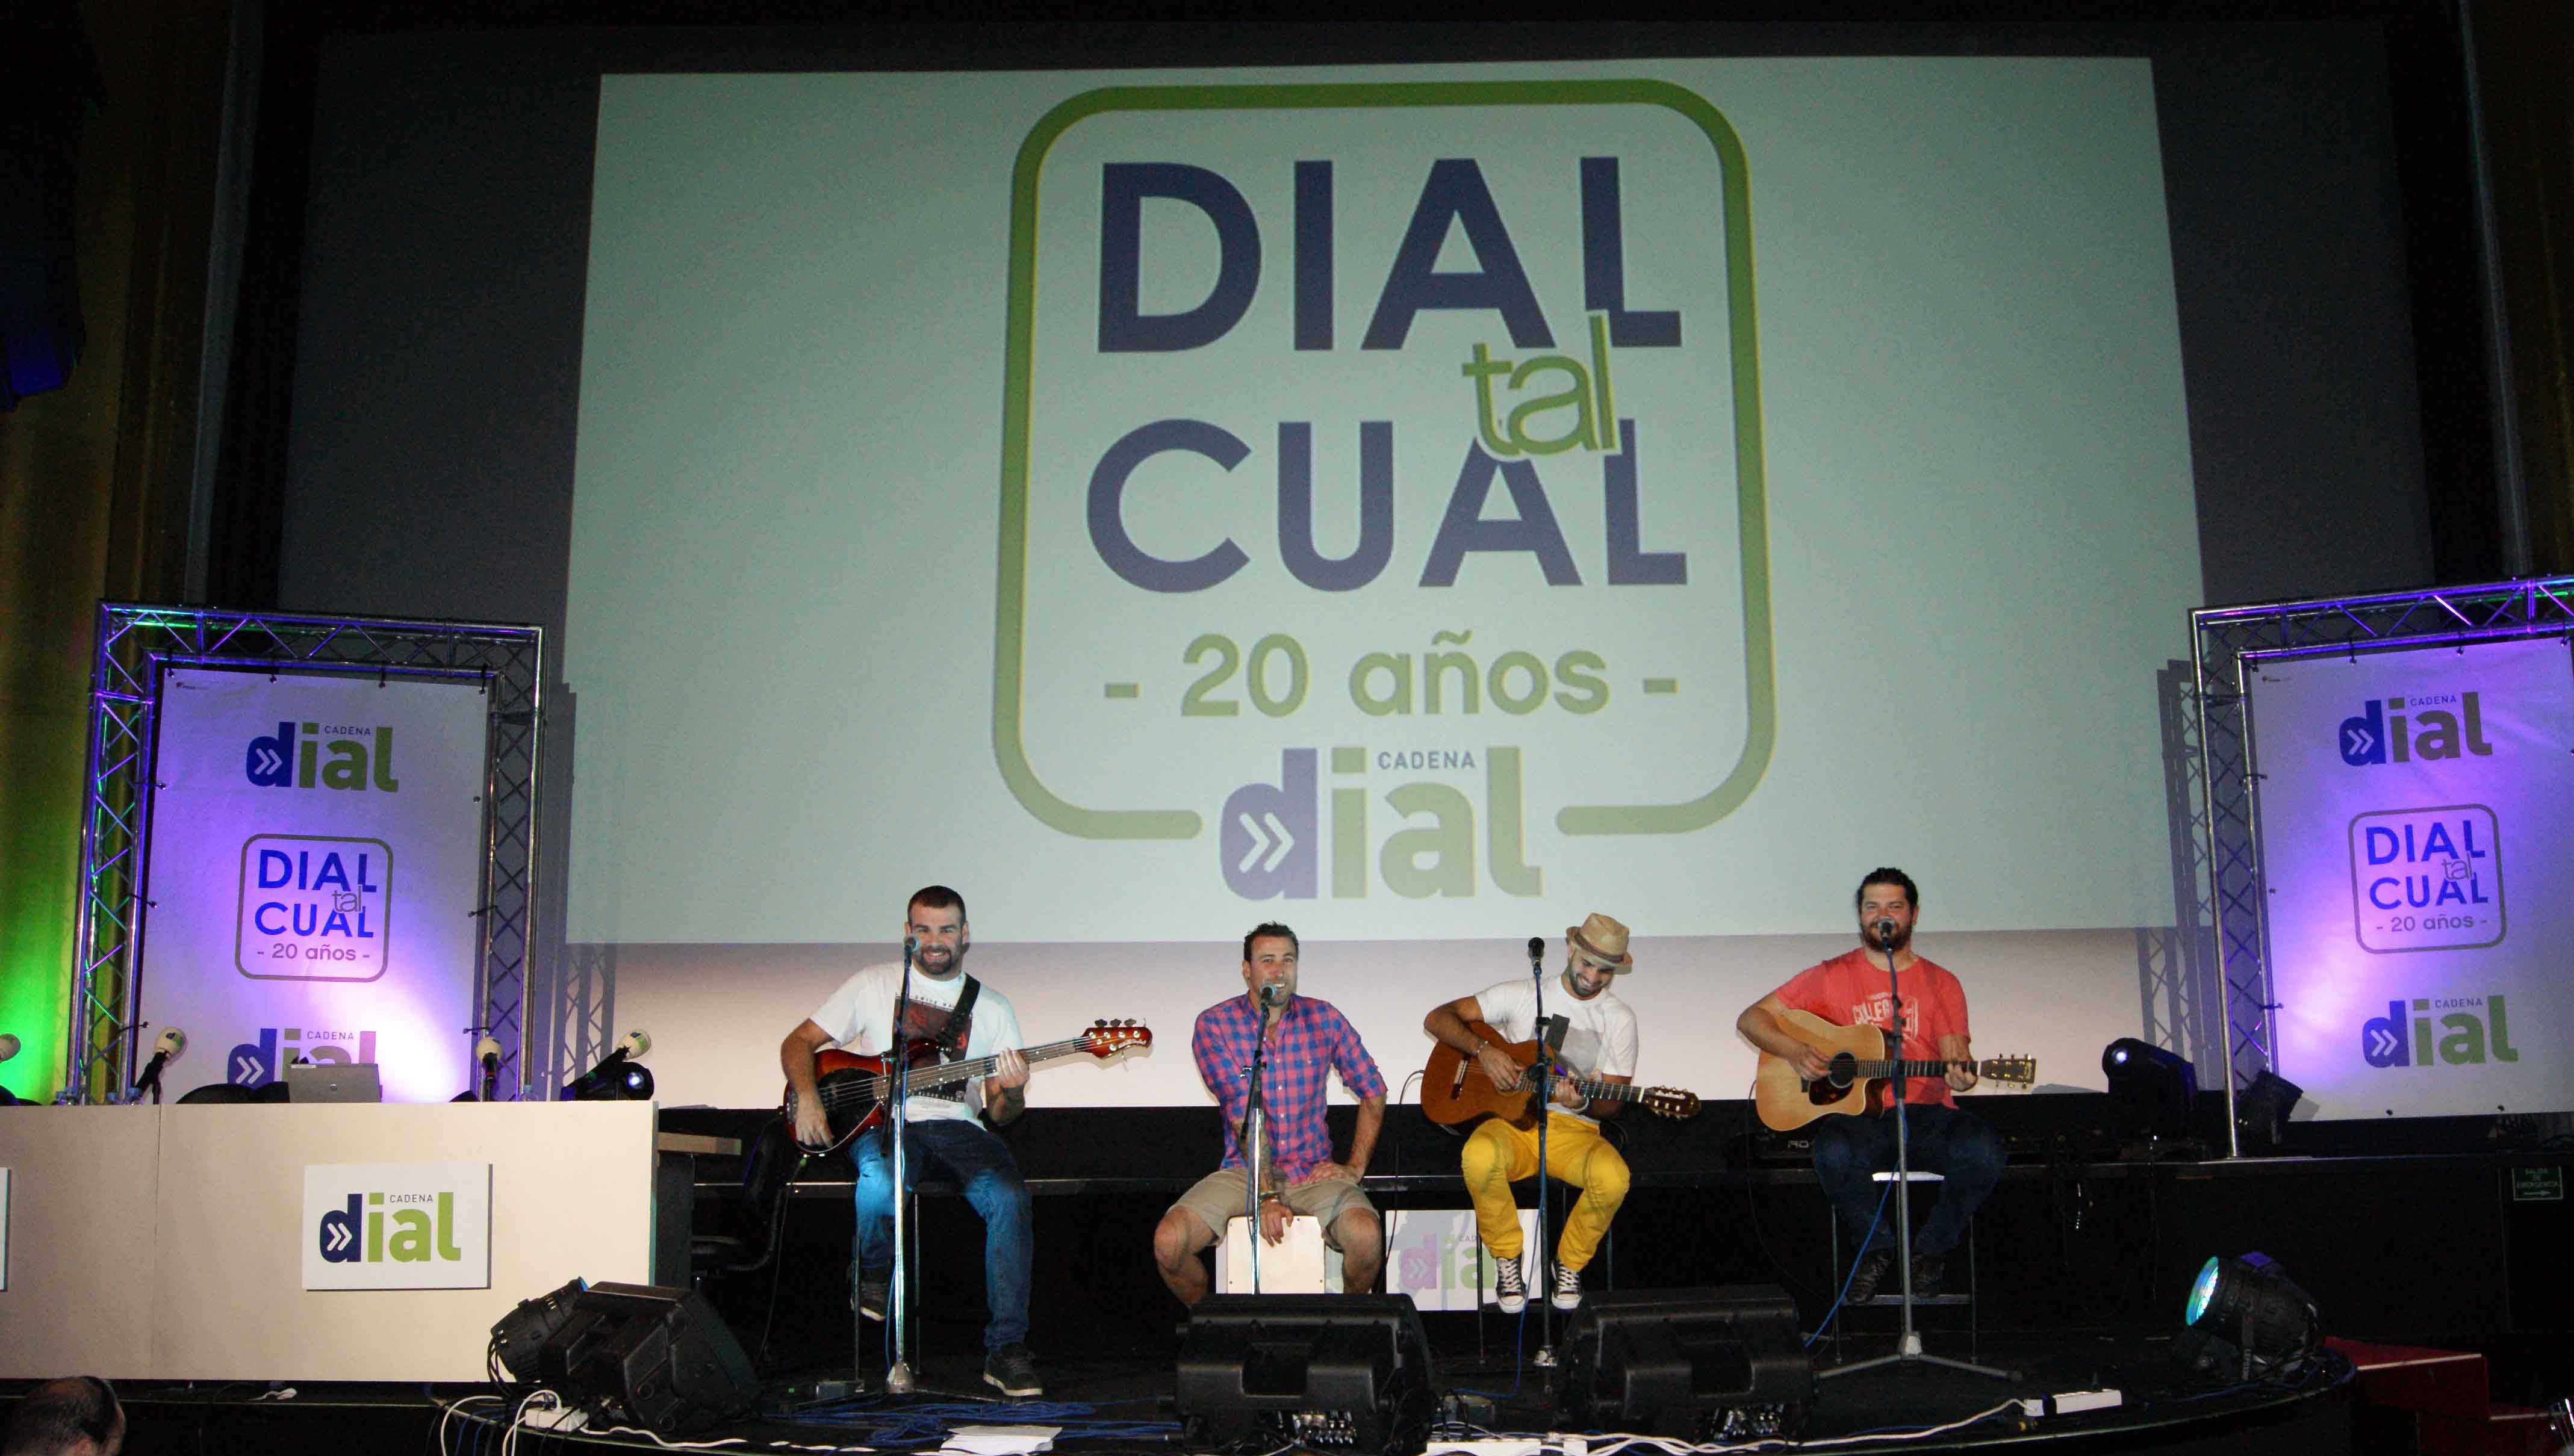 Dial Tal Cual, 20 aniversario, Madrid